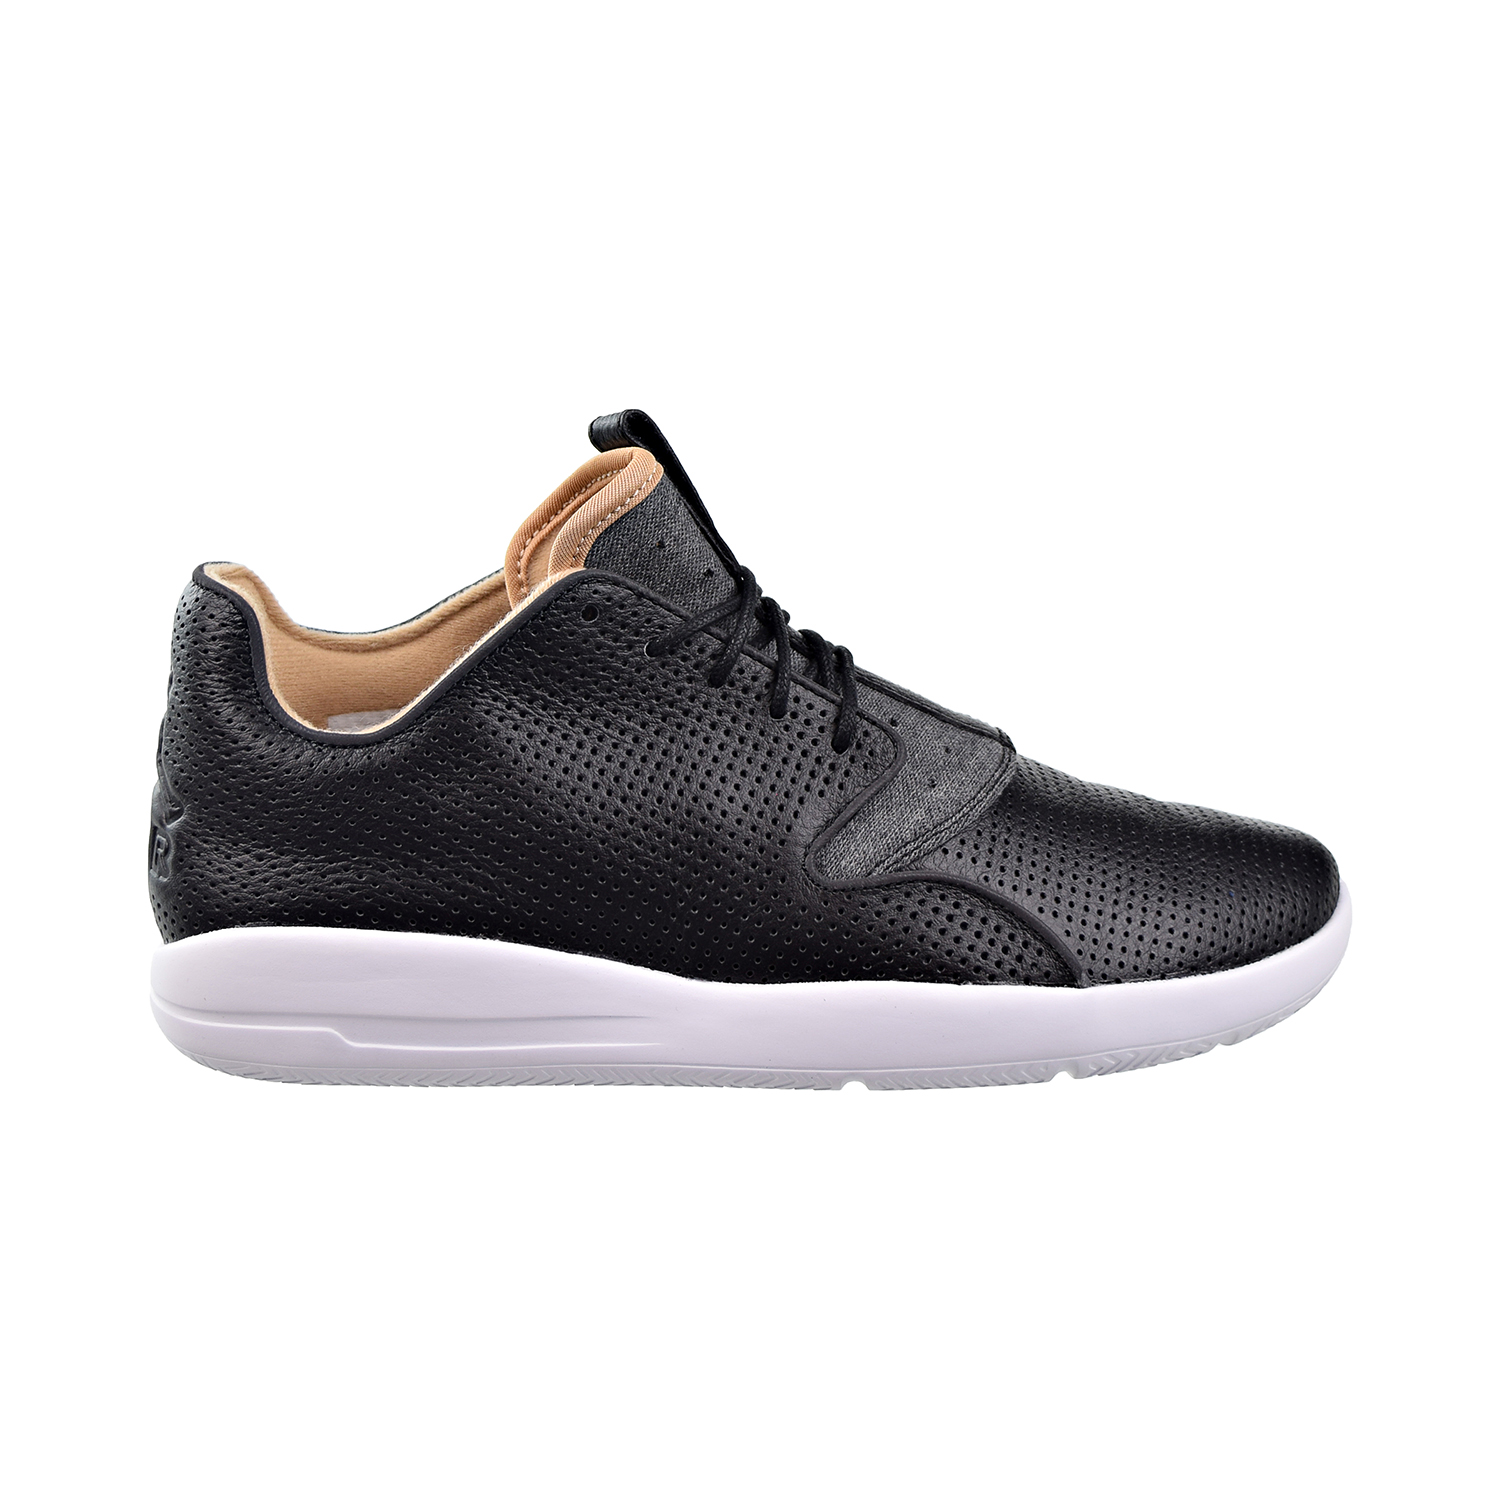 particle root Sickness Nike Jordan Eclipse LTR Mens Shoes Black/Vachetta Tan/White 807706-030